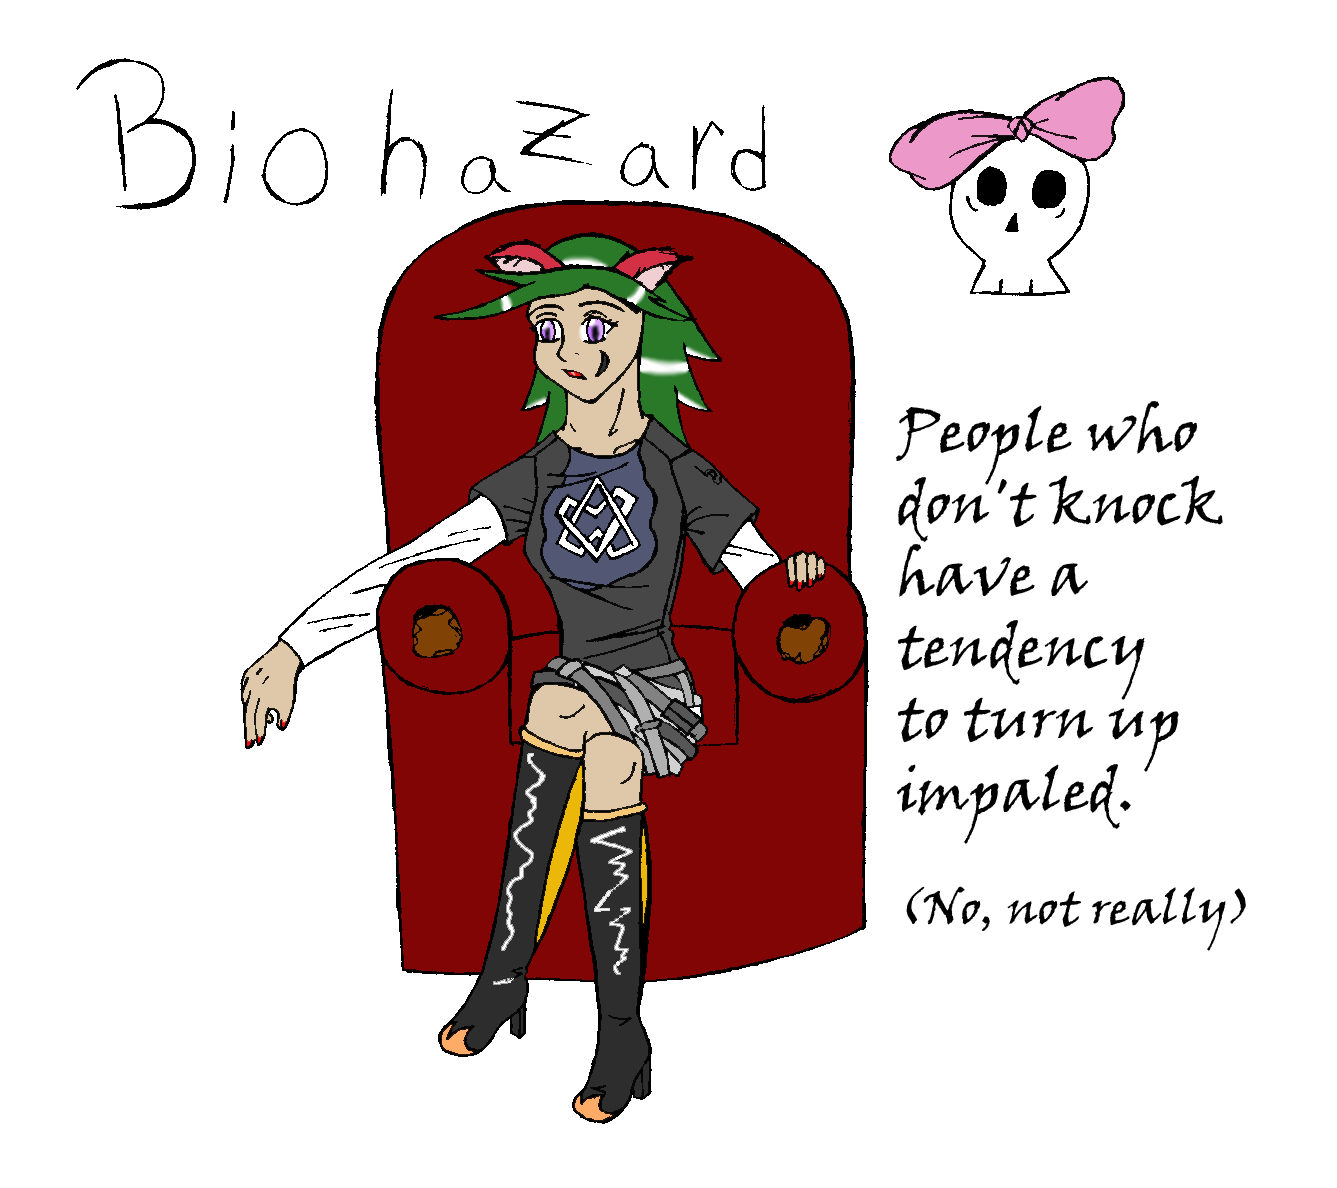 Biohazard by Living_Dead_Girl